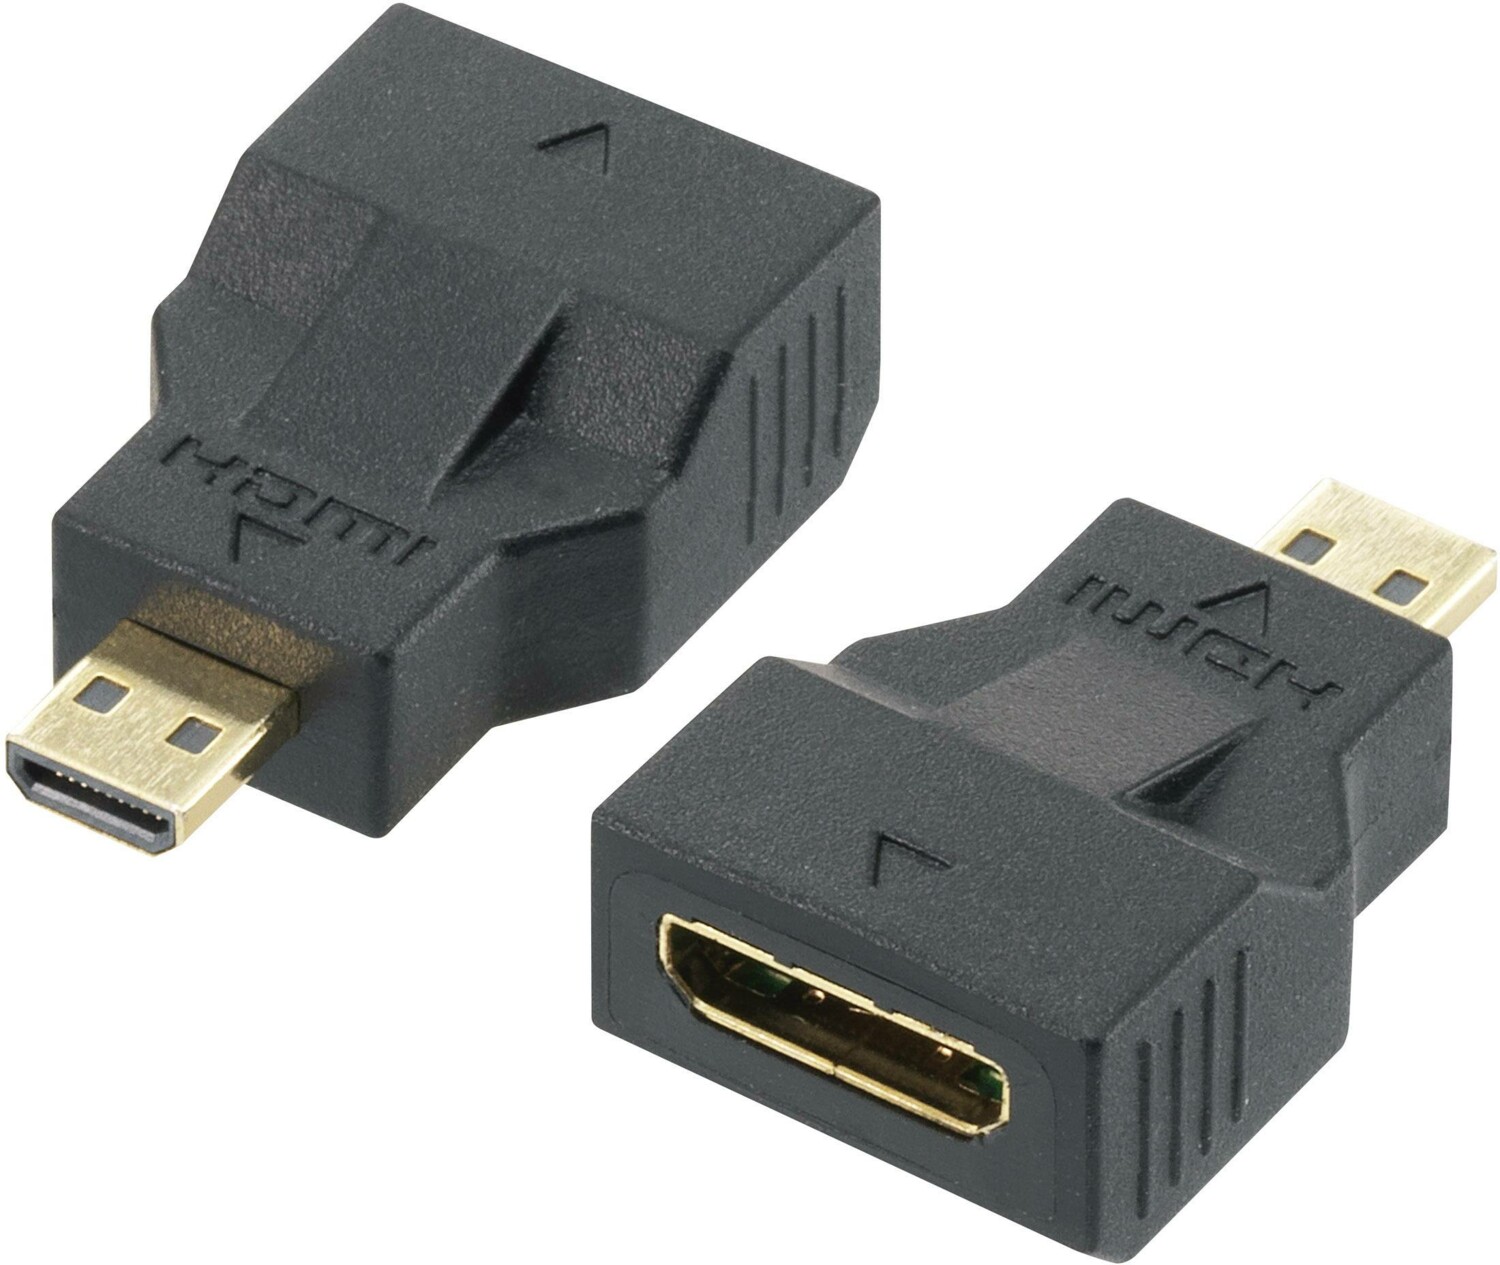 Connectique - Adaptateur Micro HDMI